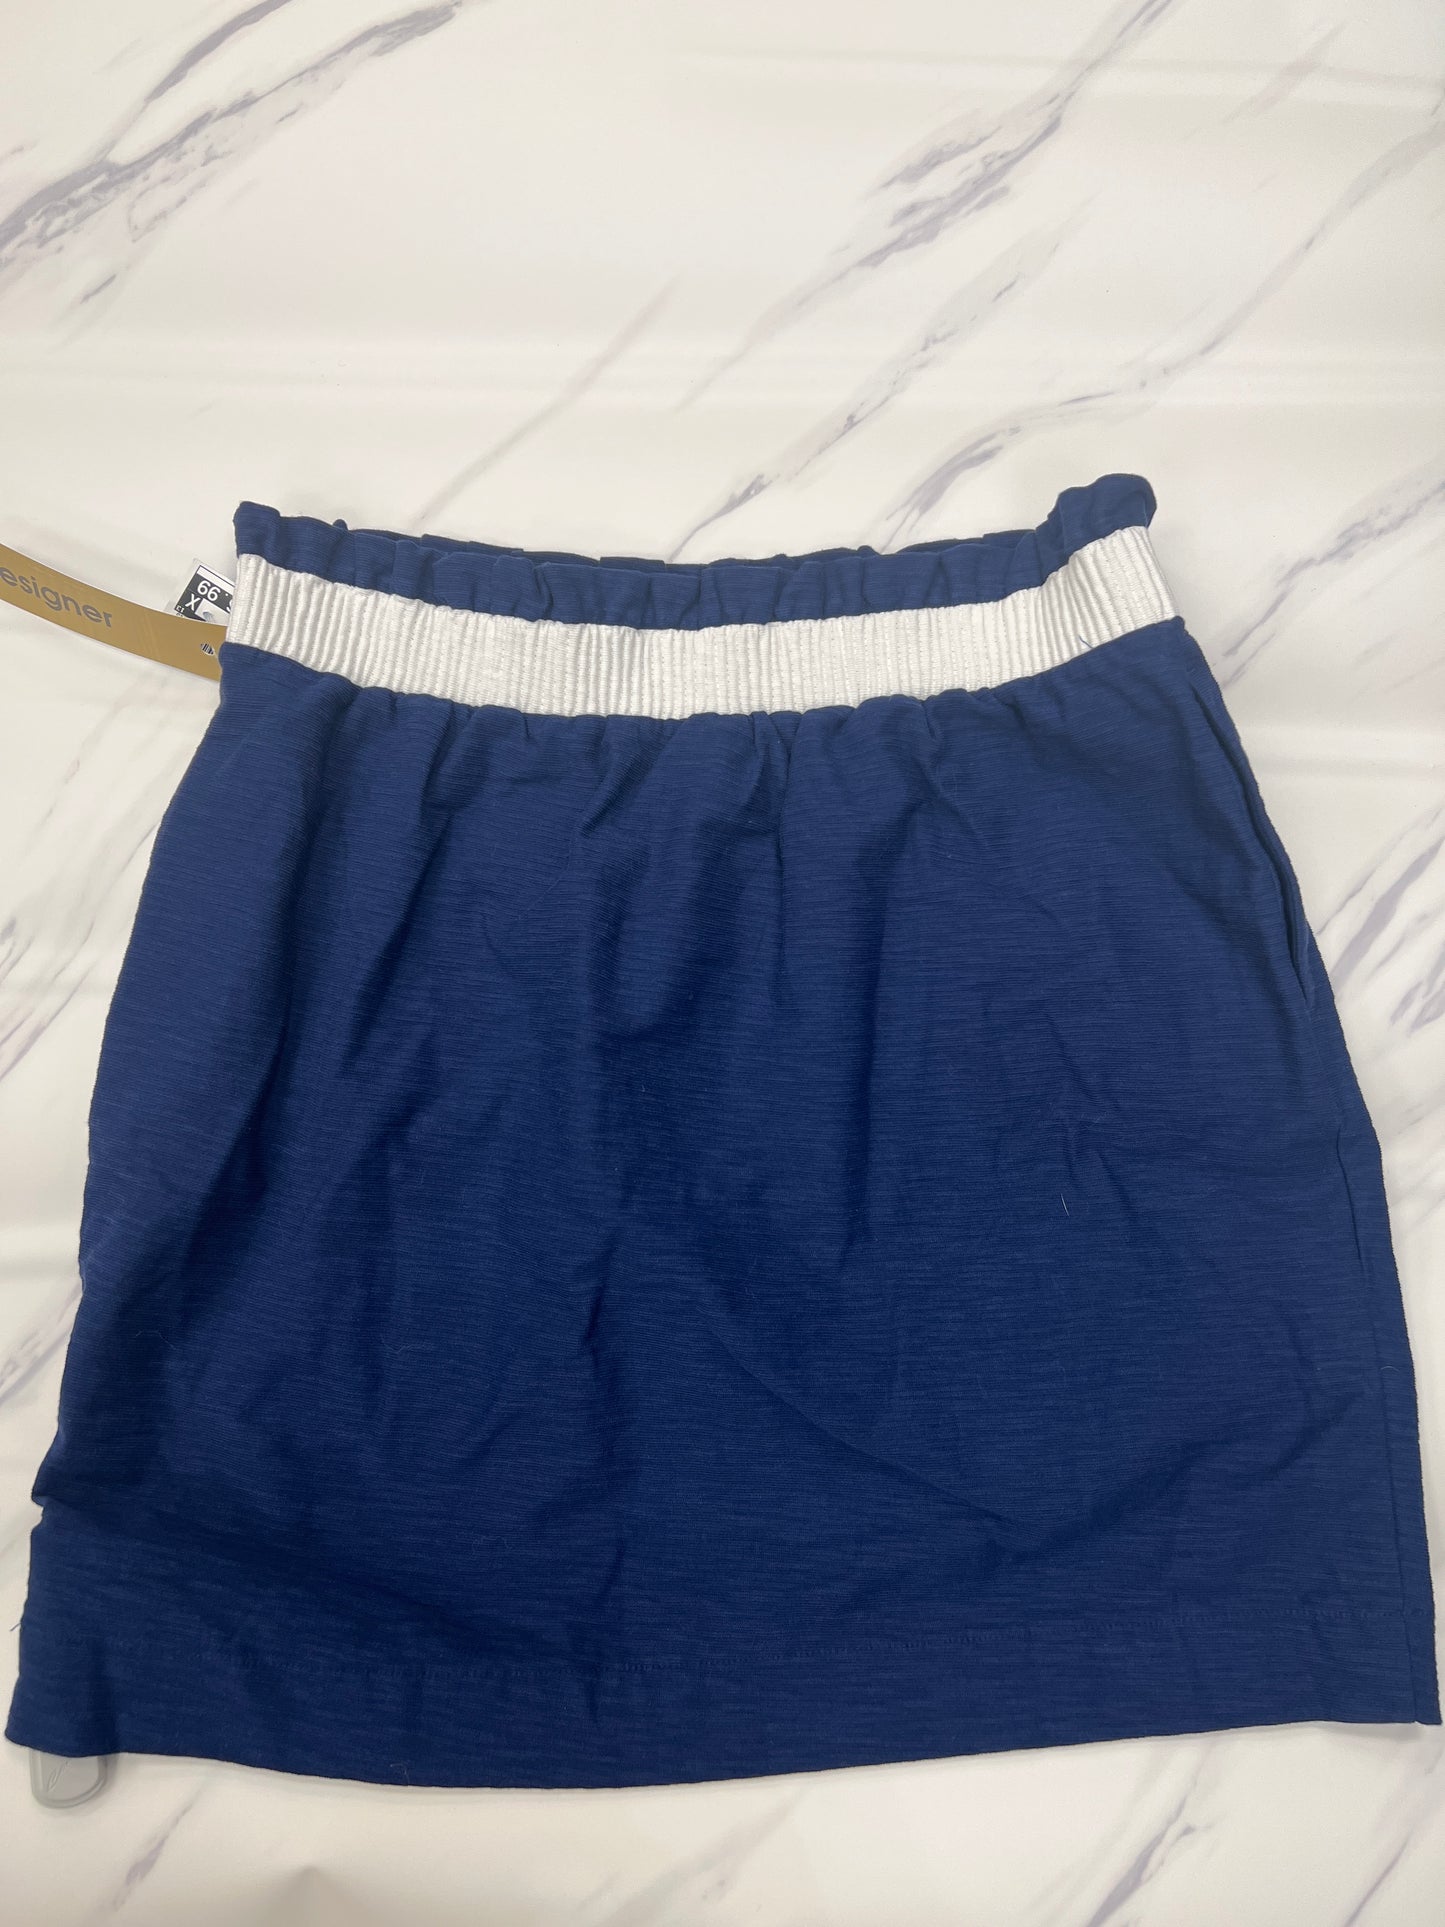 Skirt Mini & Short By Vineyard Vines  Size: M